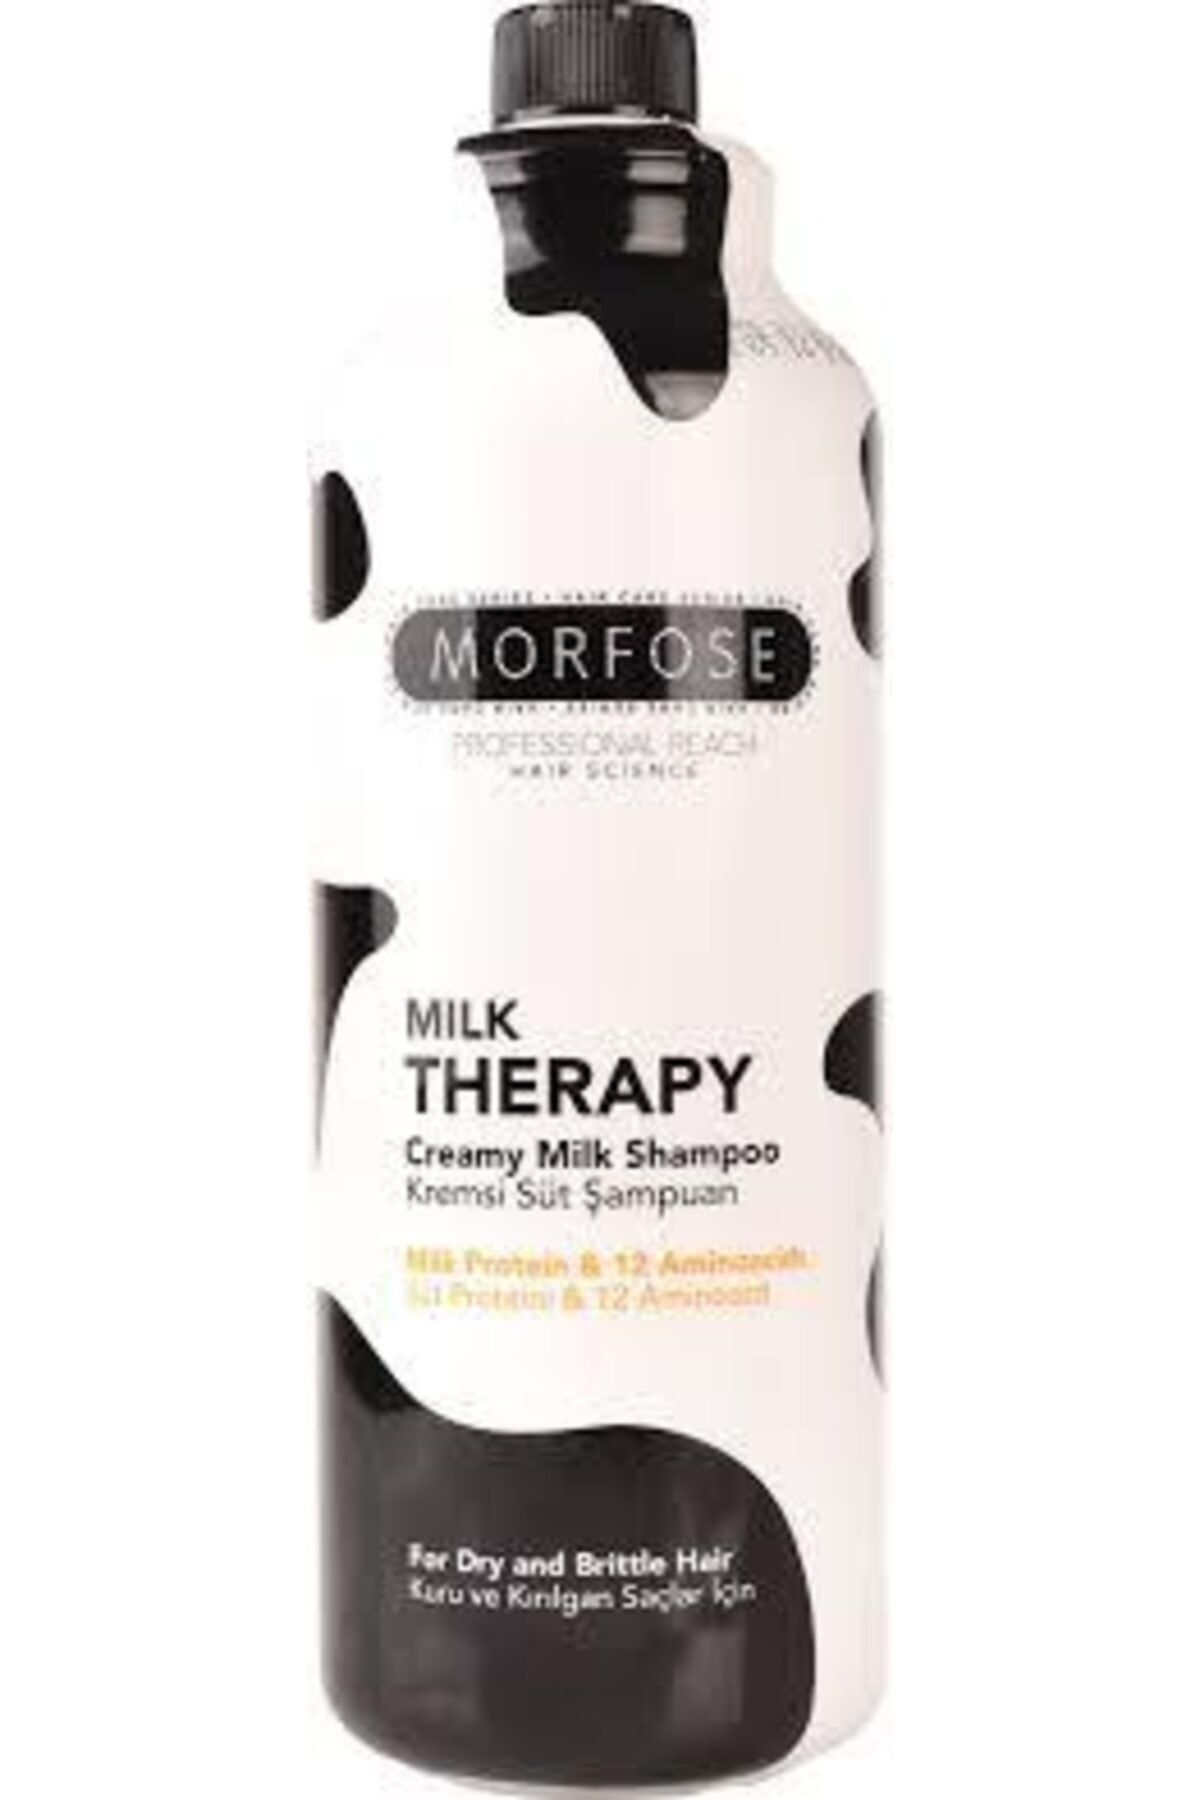 Morfose Milk Therapy Kremsi Süt Şampuan 1000 Ml.